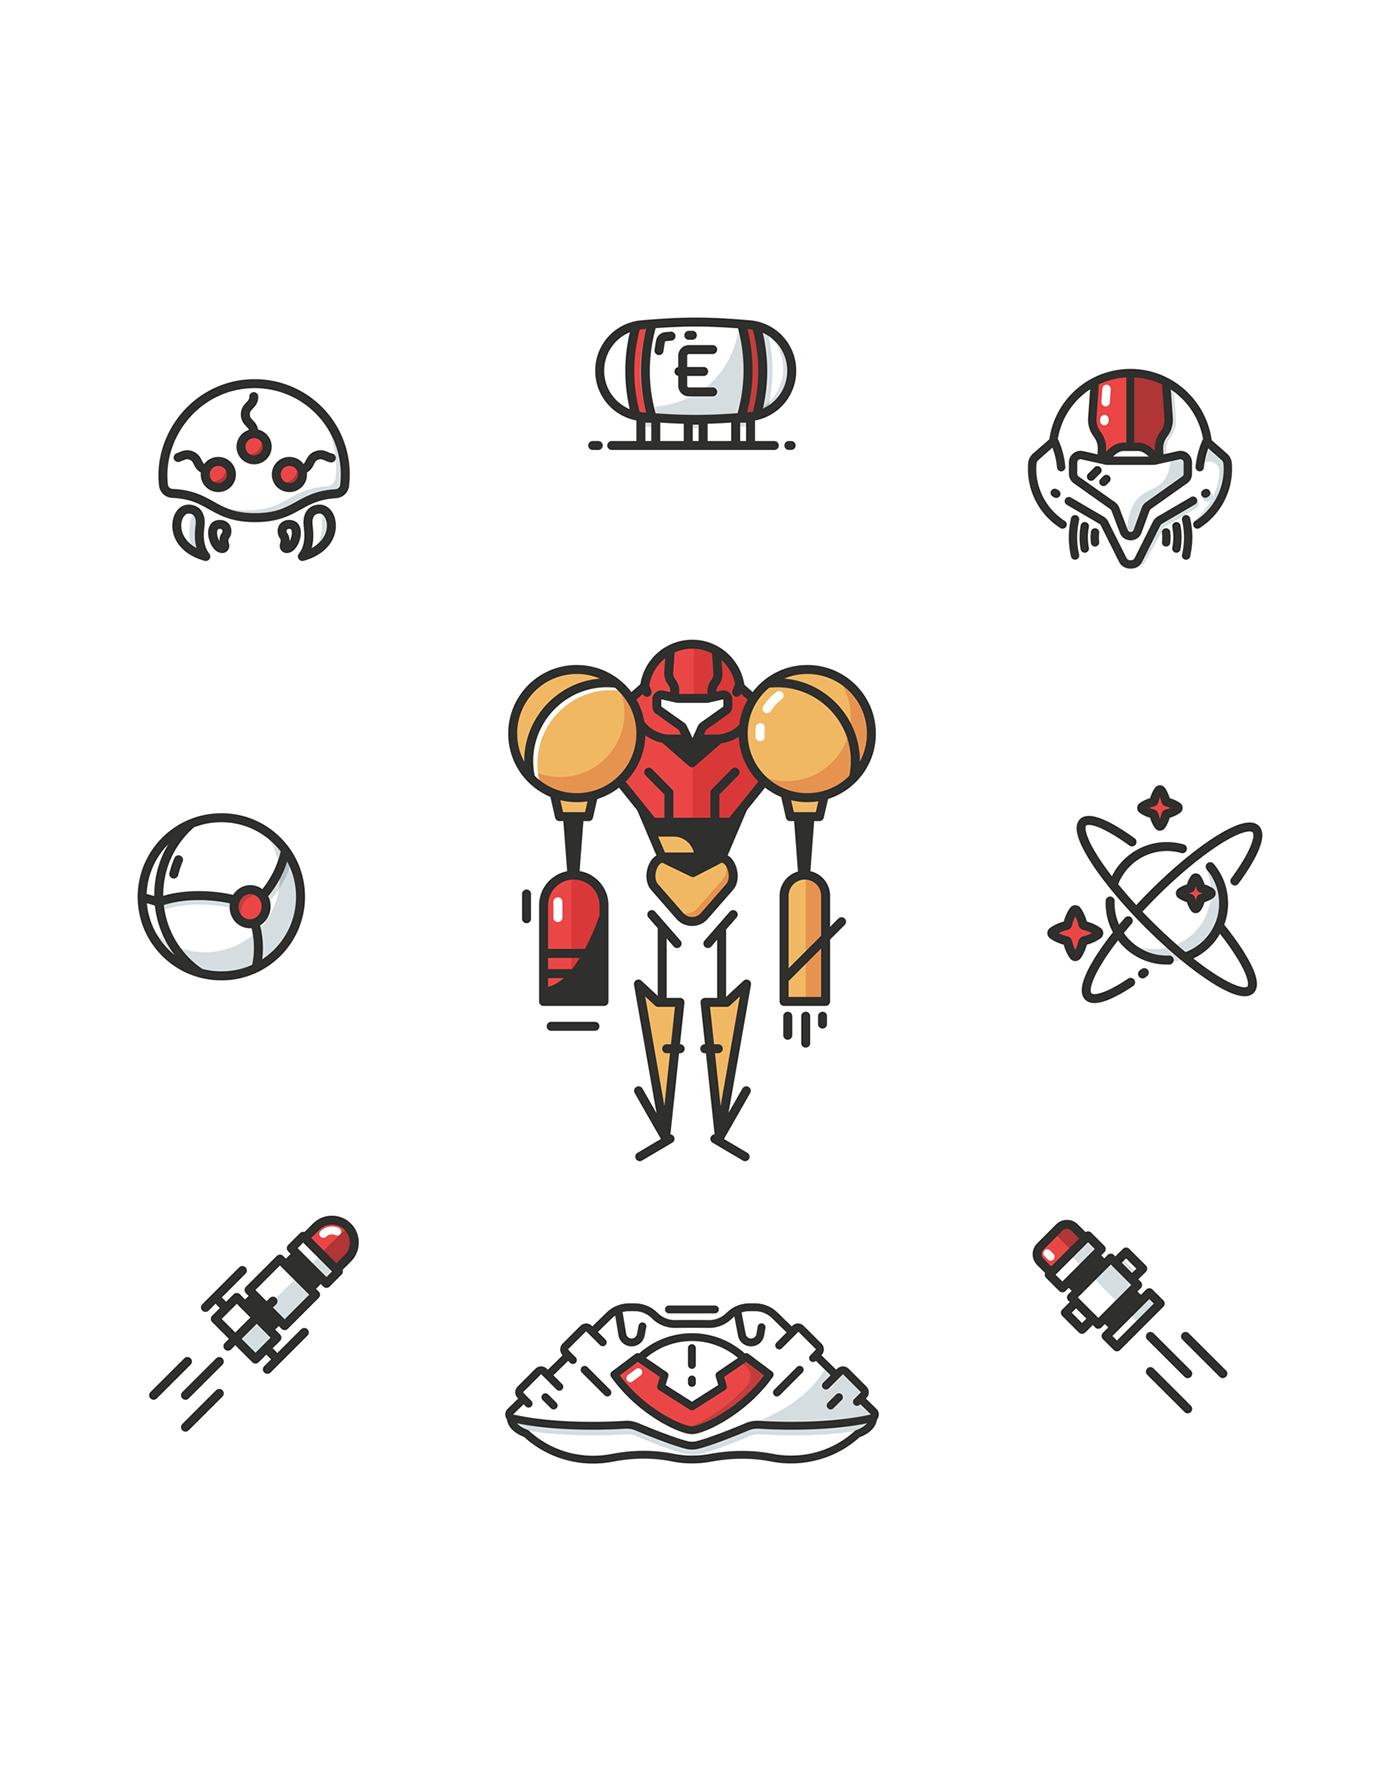 icons of Super Metroid